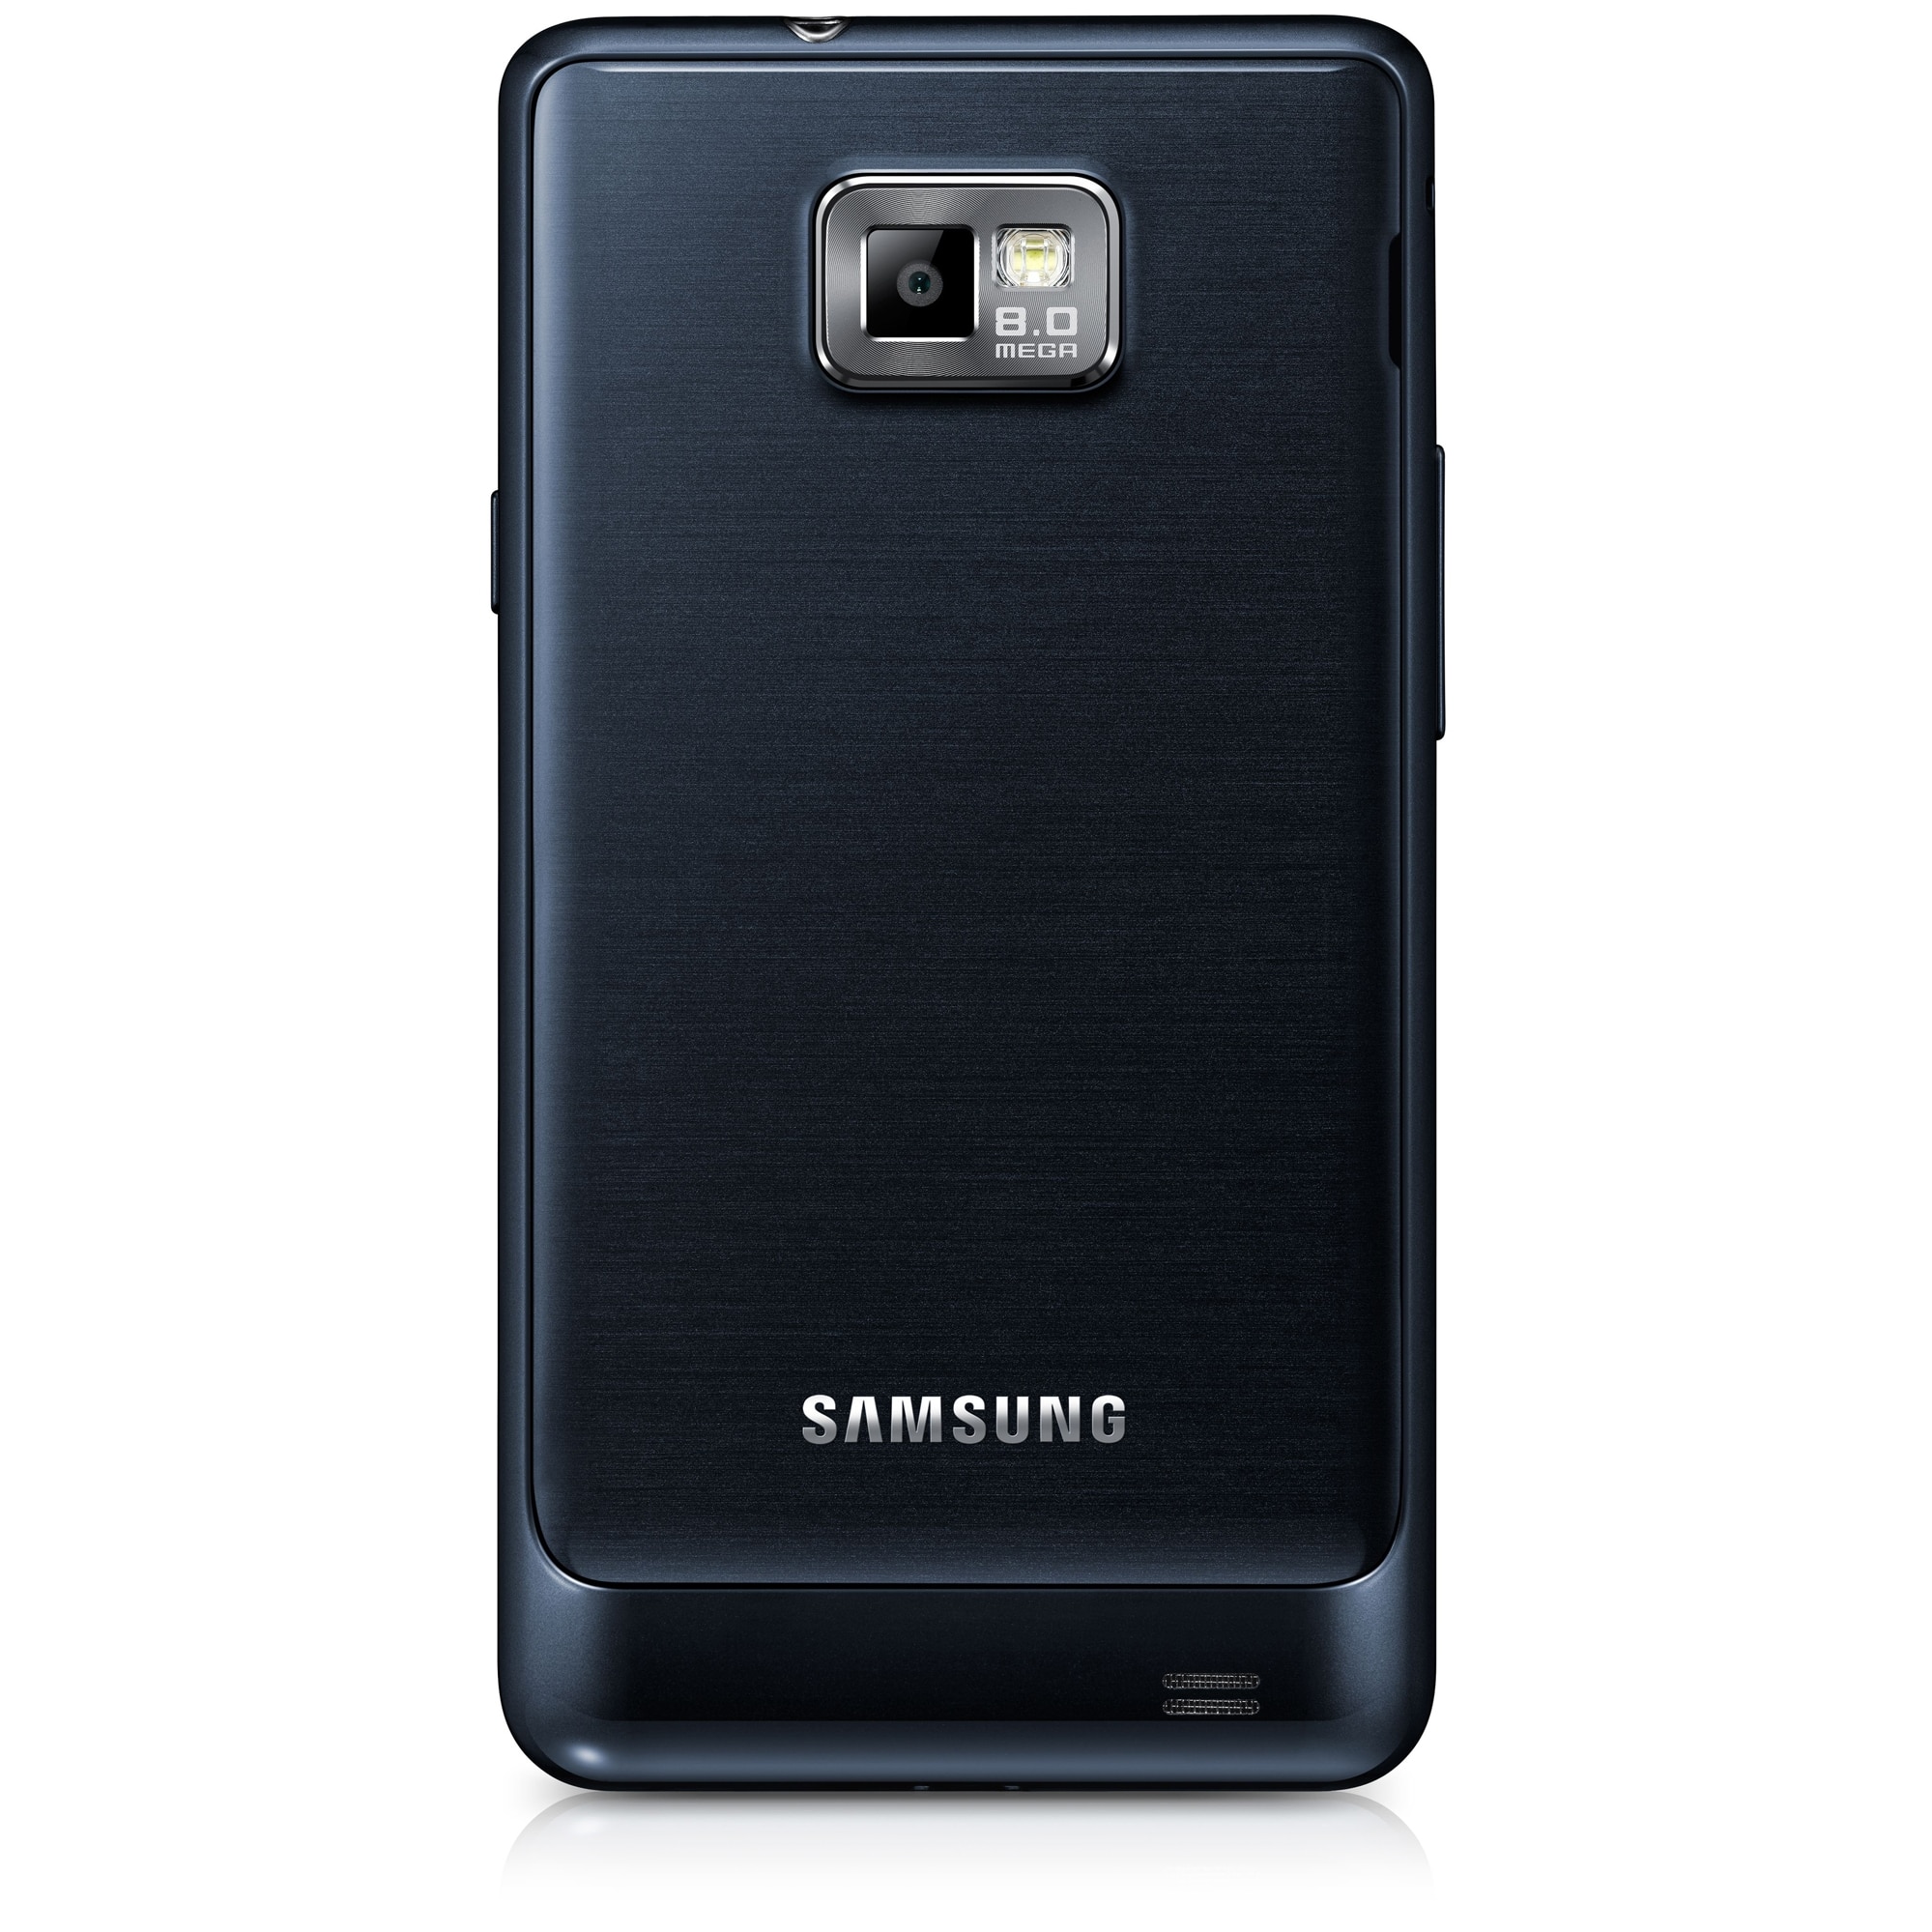 Galaxy s 24 плюс. Samsung s2 Plus. Samsung Galaxy s2 Plus. Samsung Galaxy s II gt-i9100. Samsung Galaxy s II Plus gt-i9105.